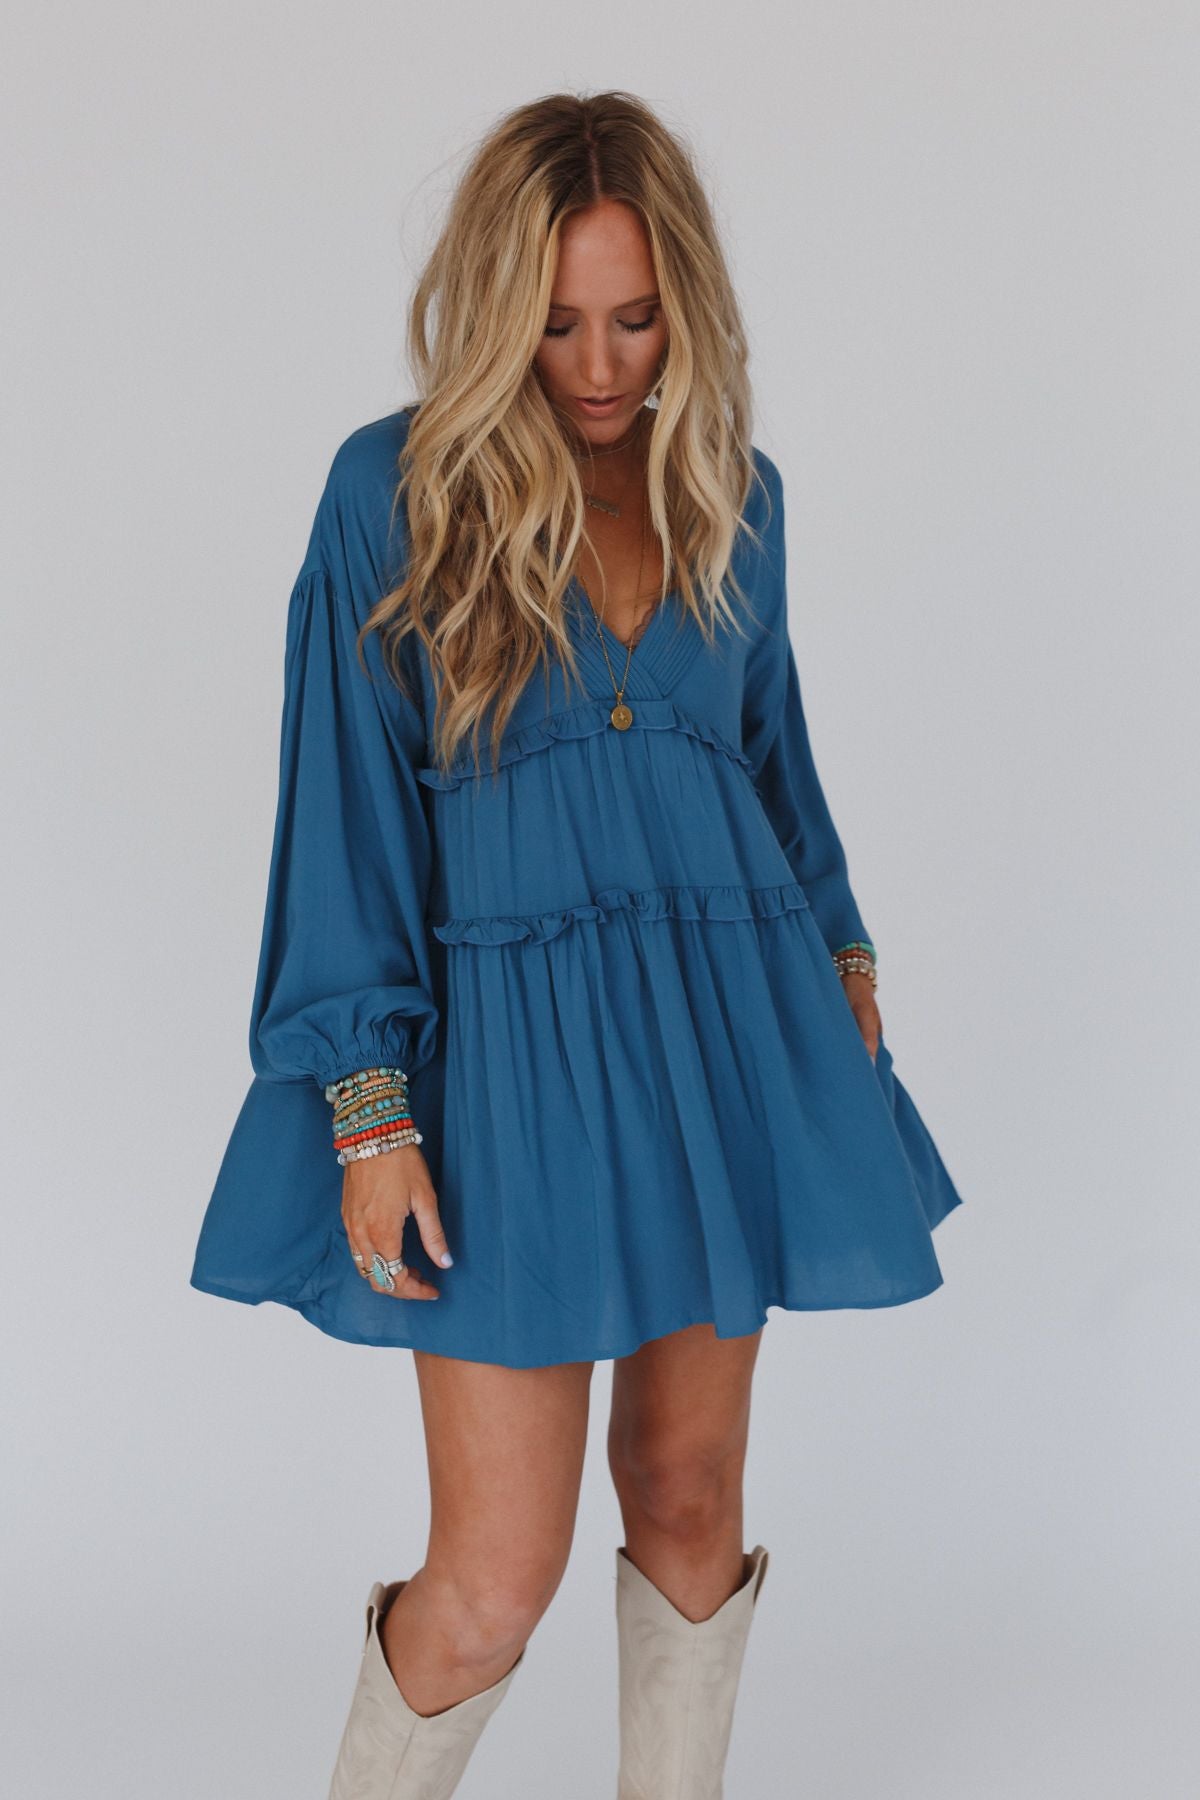 All Things New Mini Dress - Slate Blue